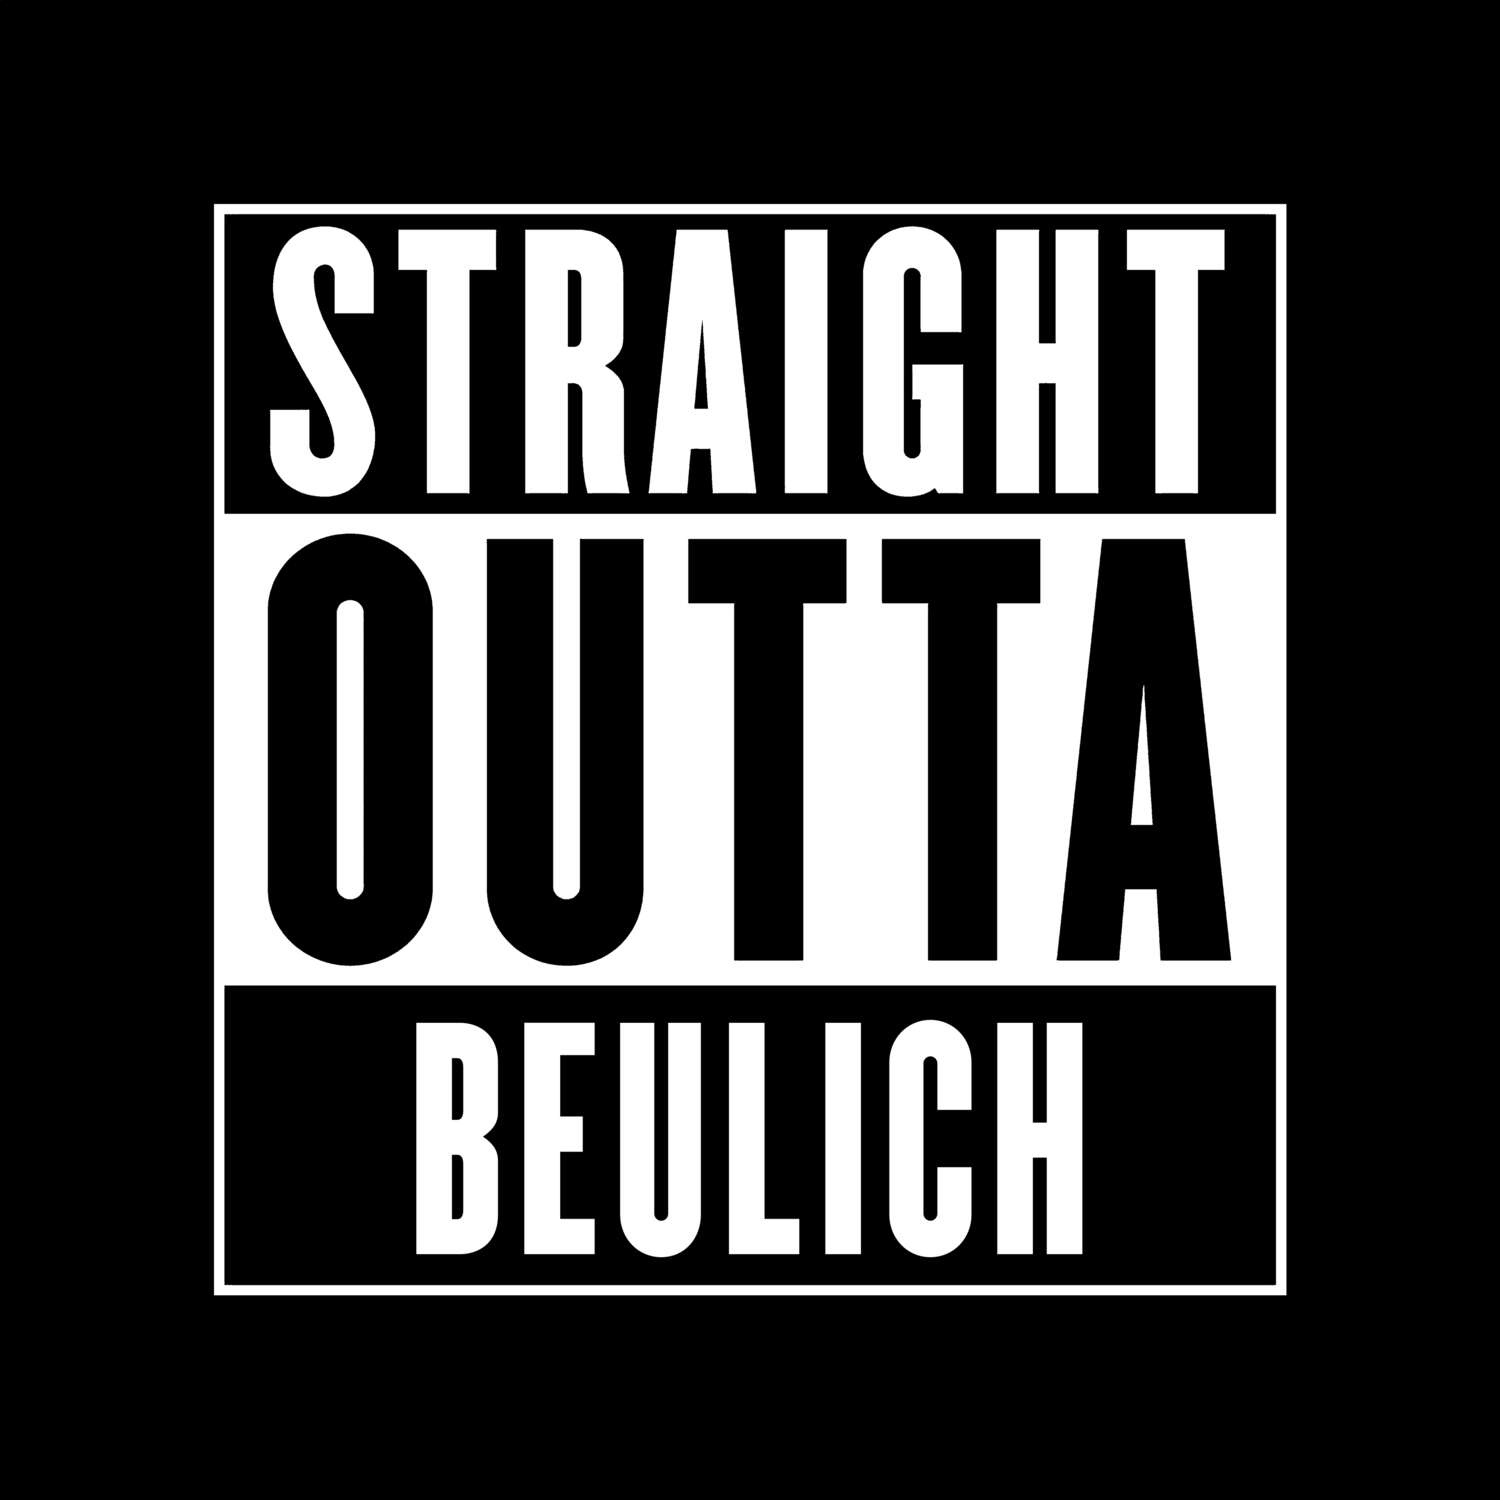 Beulich T-Shirt »Straight Outta«